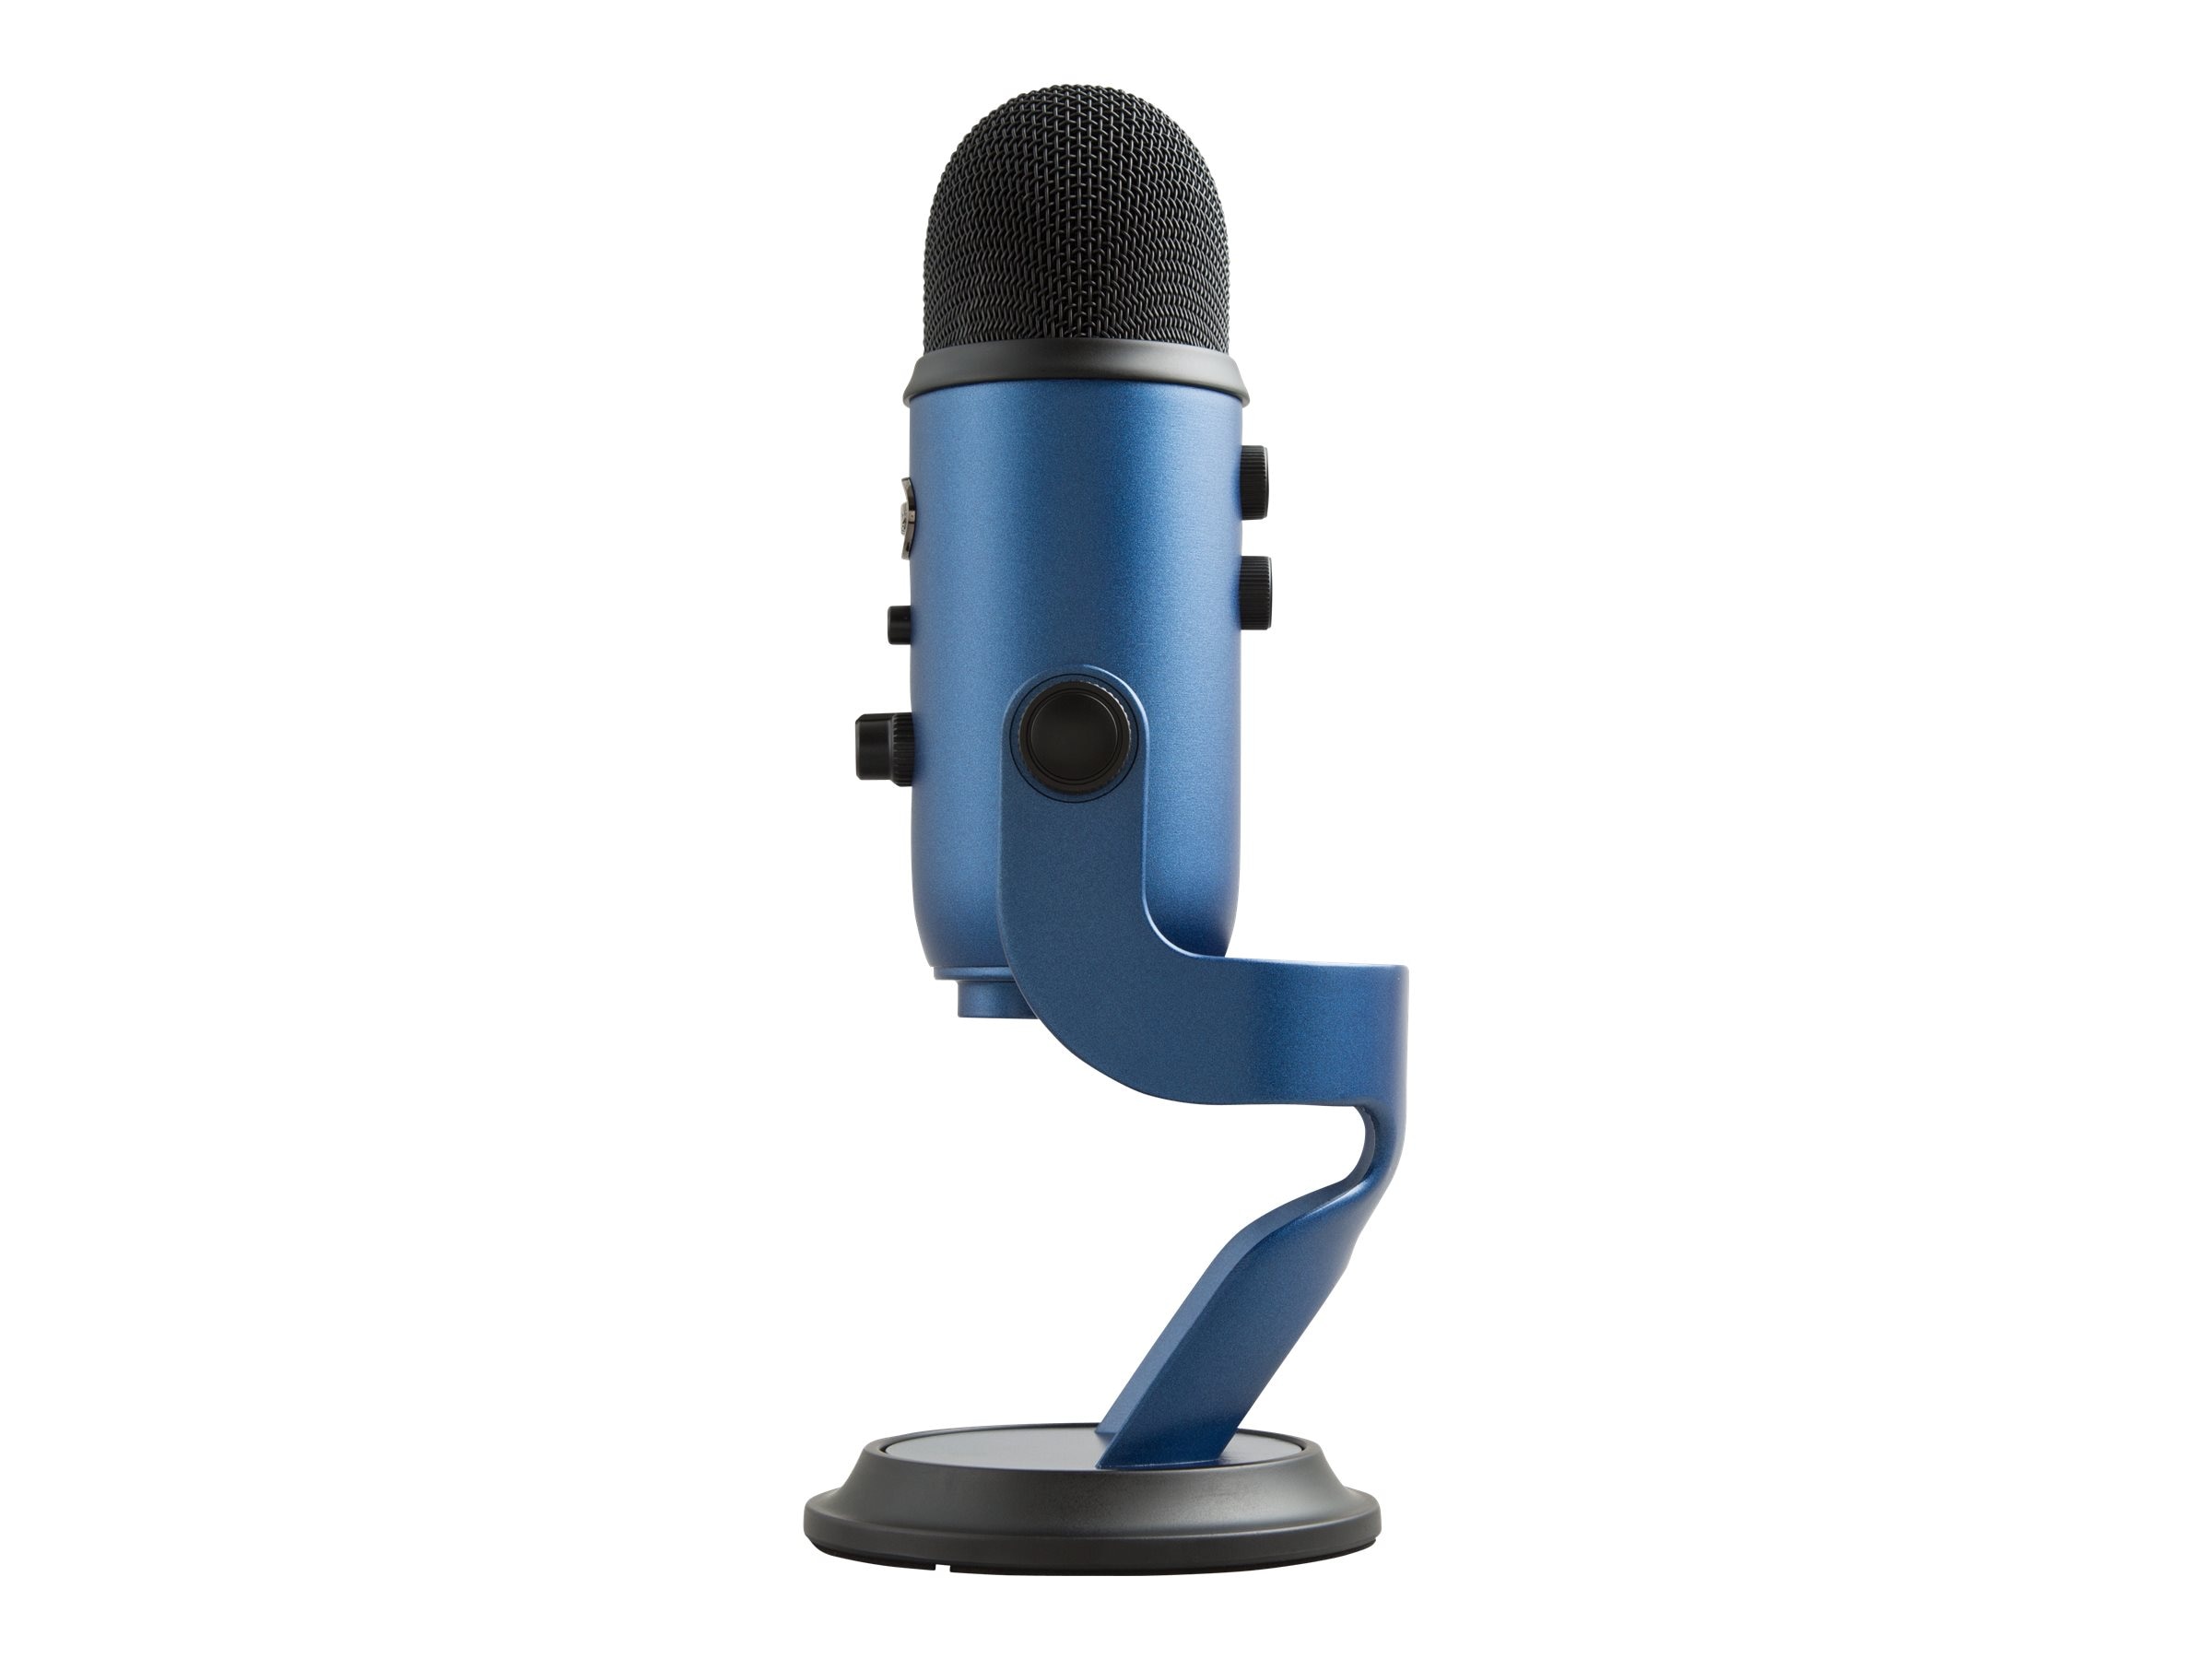 Original Logitech Blue Yeti X Used Sencond-hand USB Microphone